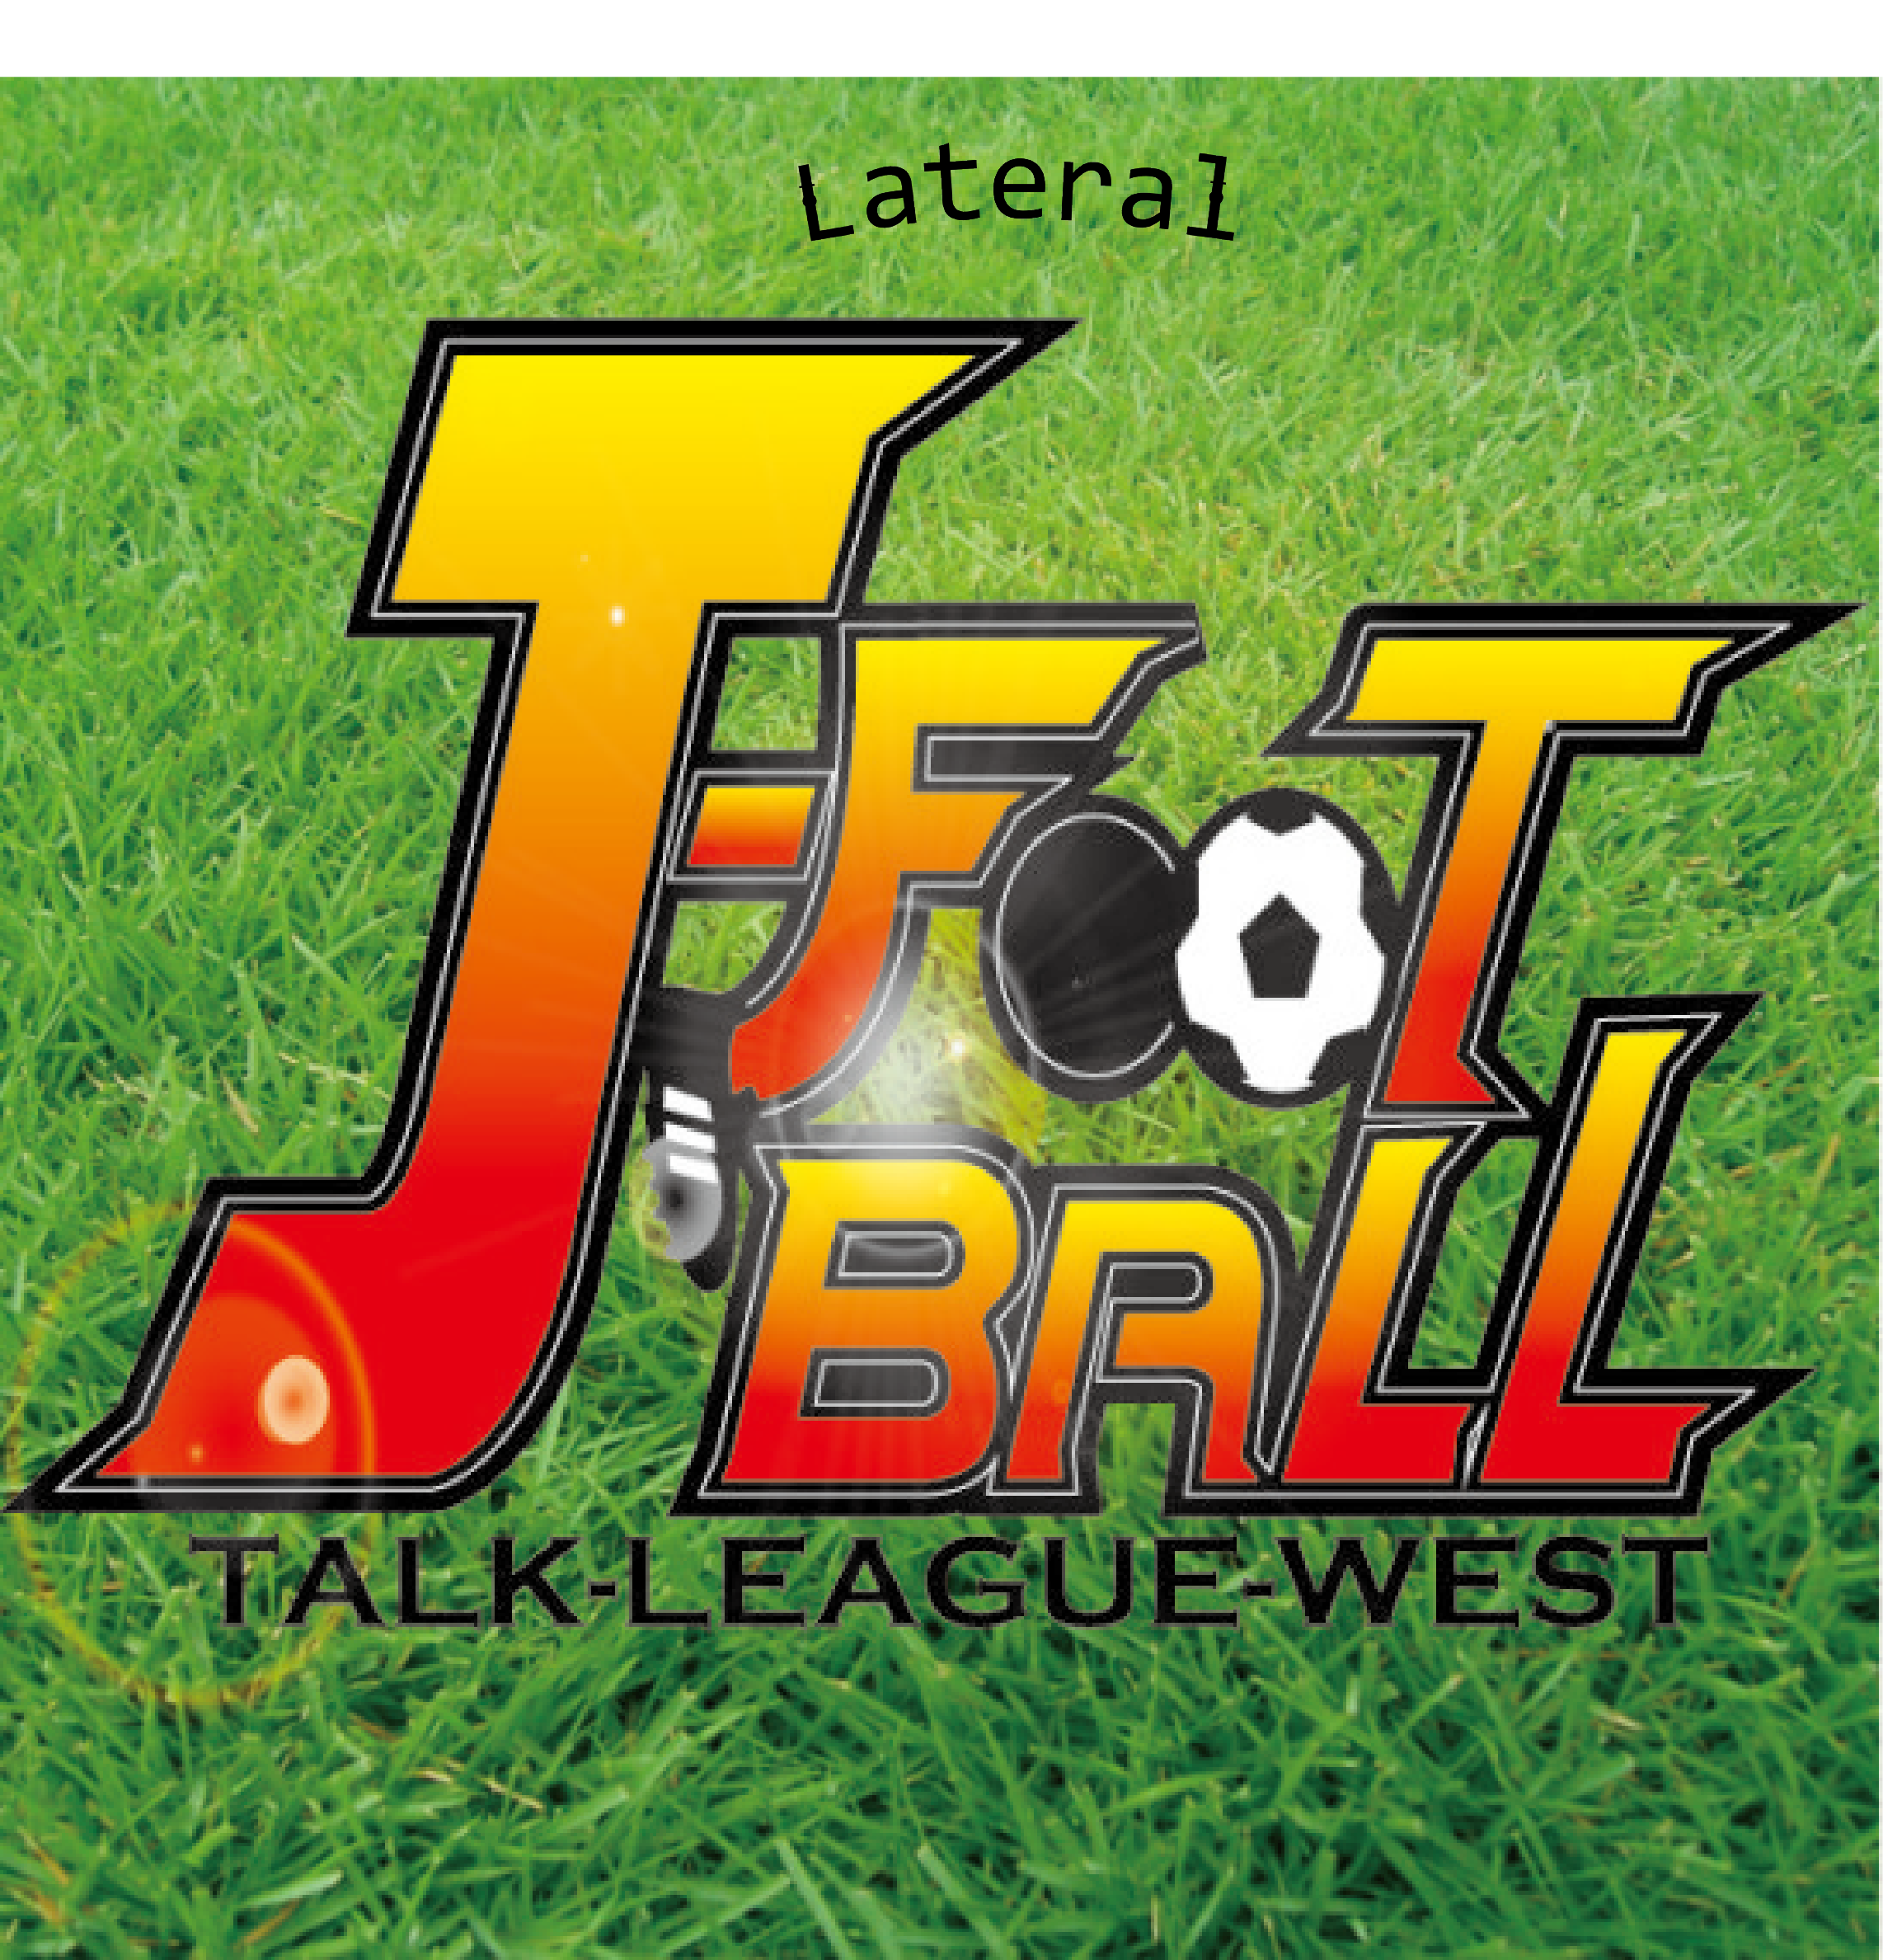 『J-FOOTBALL TALK-LEAGUE-WEST Vol.19』